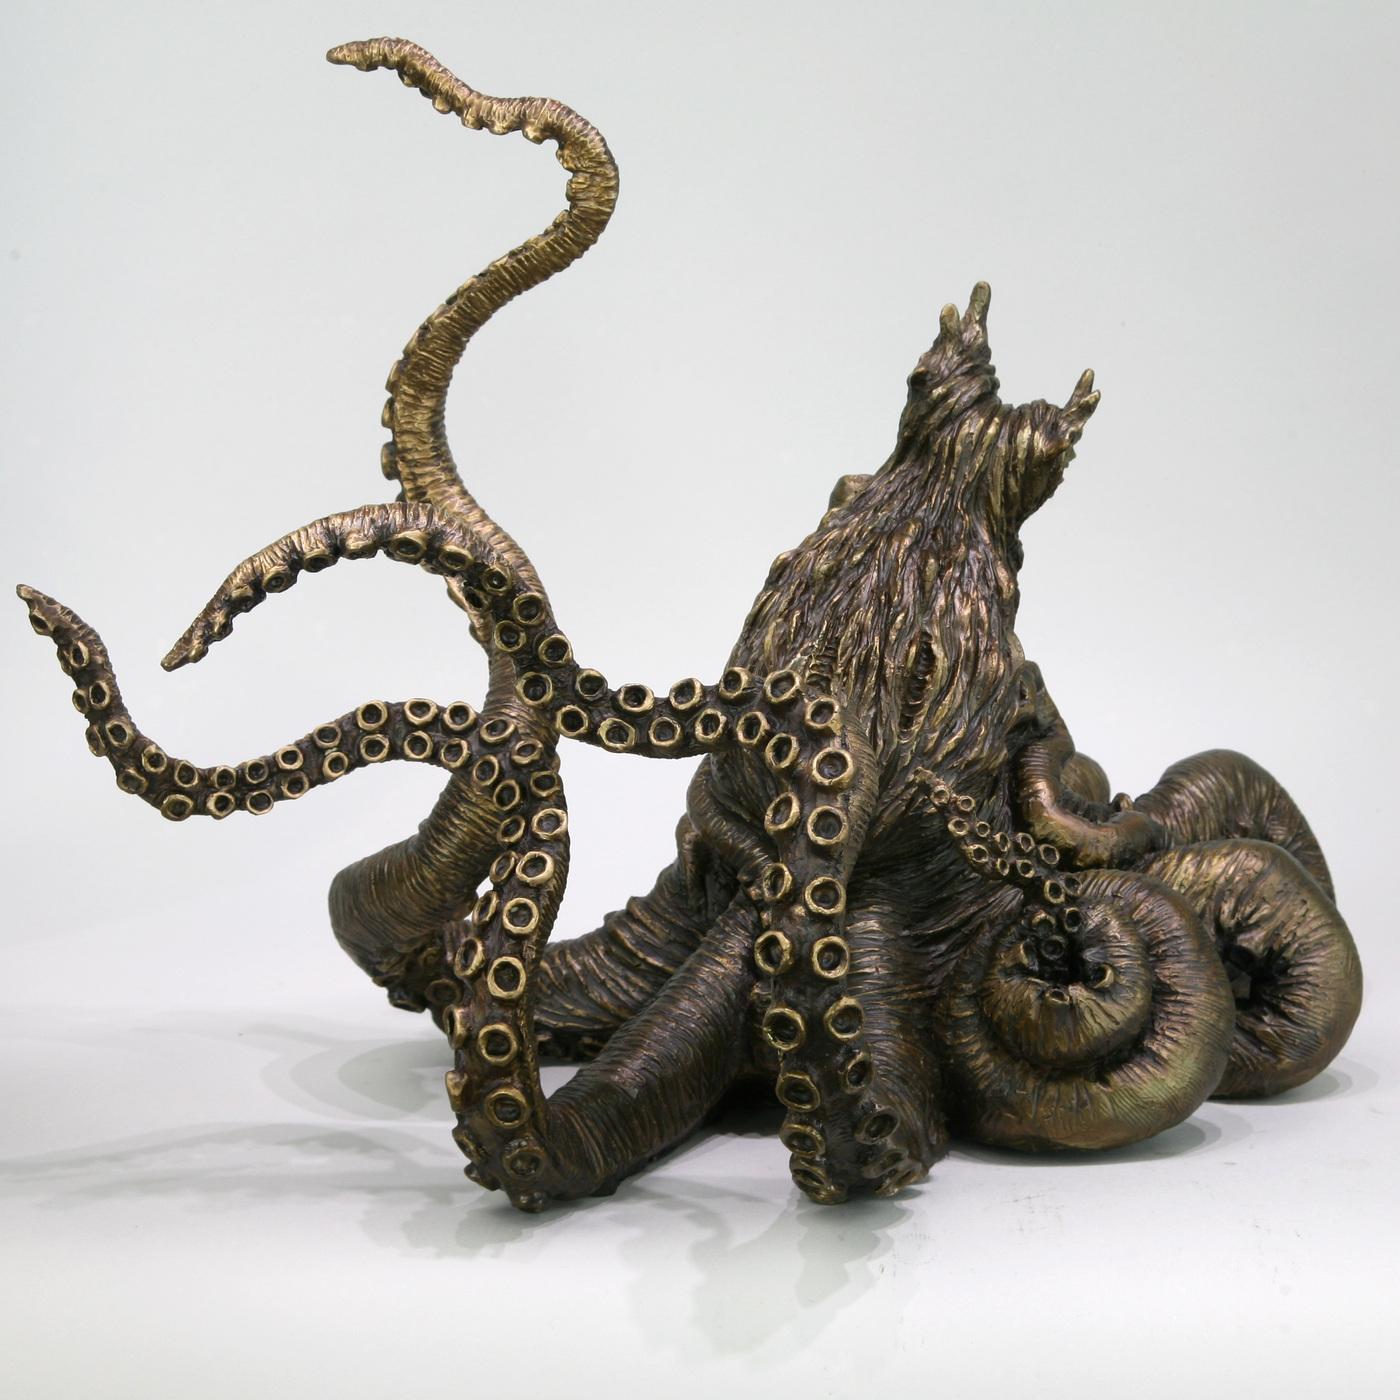 Antique Bronze Finish Octopus Cell Phone Holder Kraken Statue 